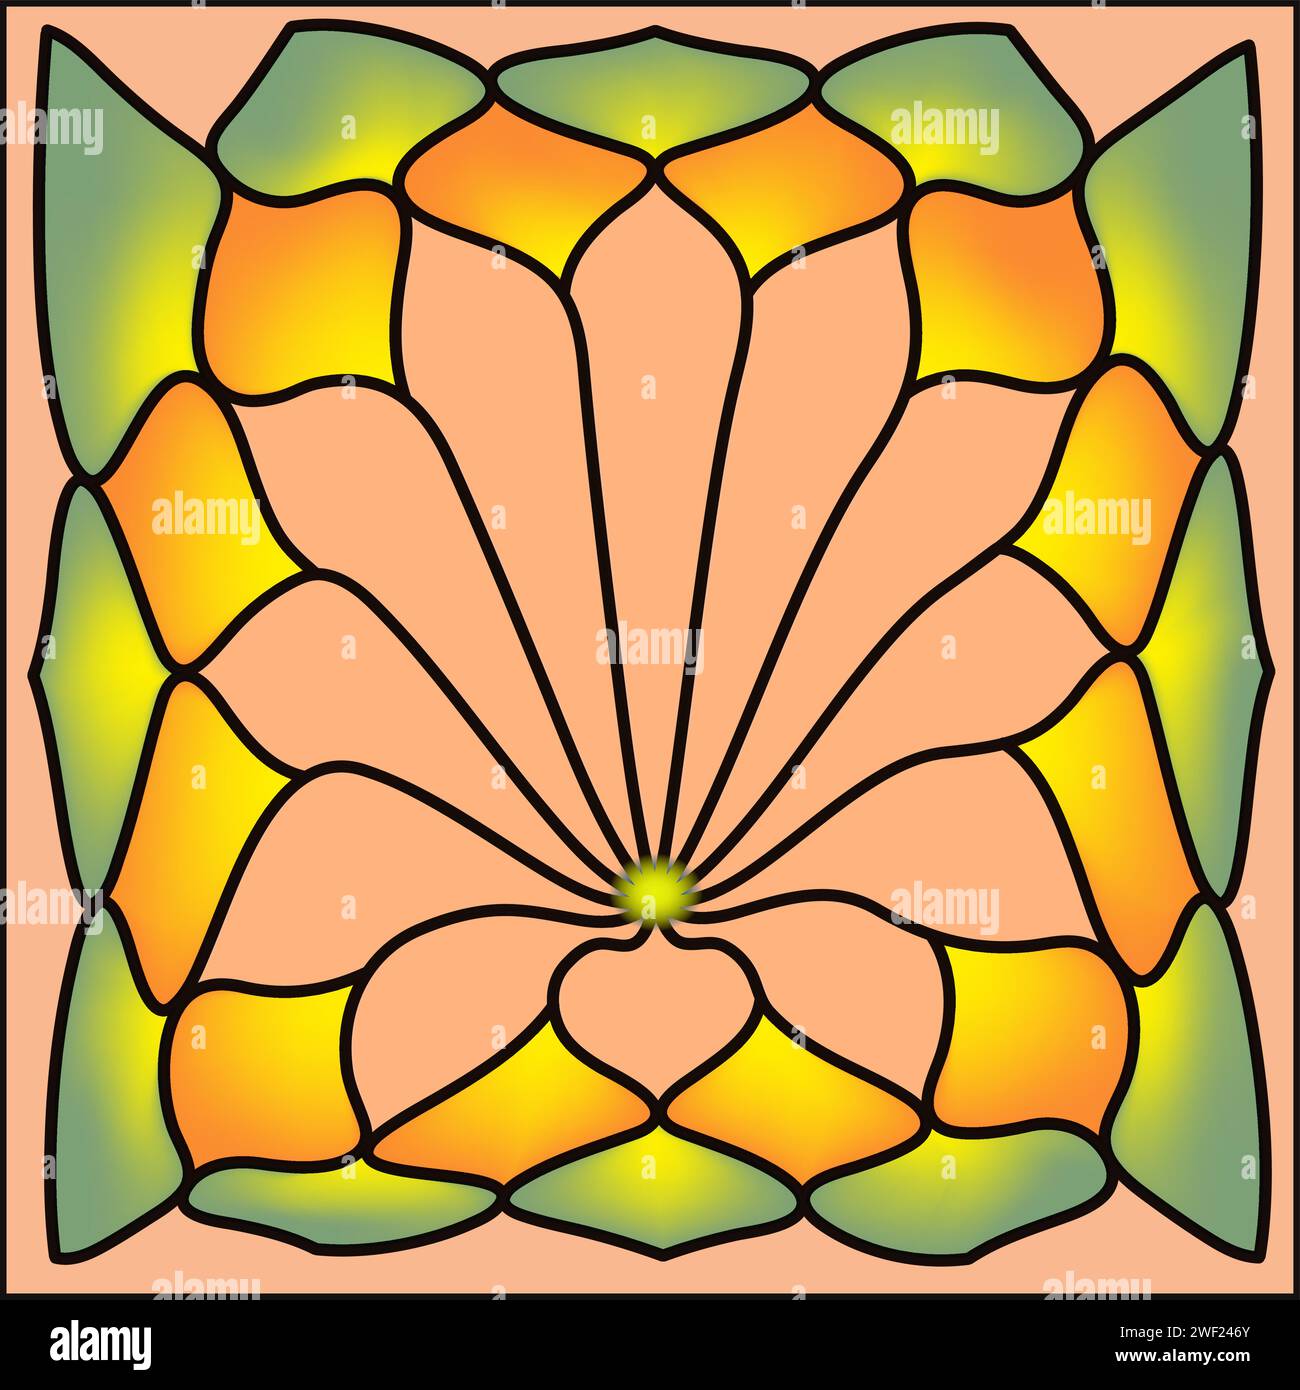 Mosaic flower Stained glass window. Kaleidoscope pattern Vector illustration Stock Vector